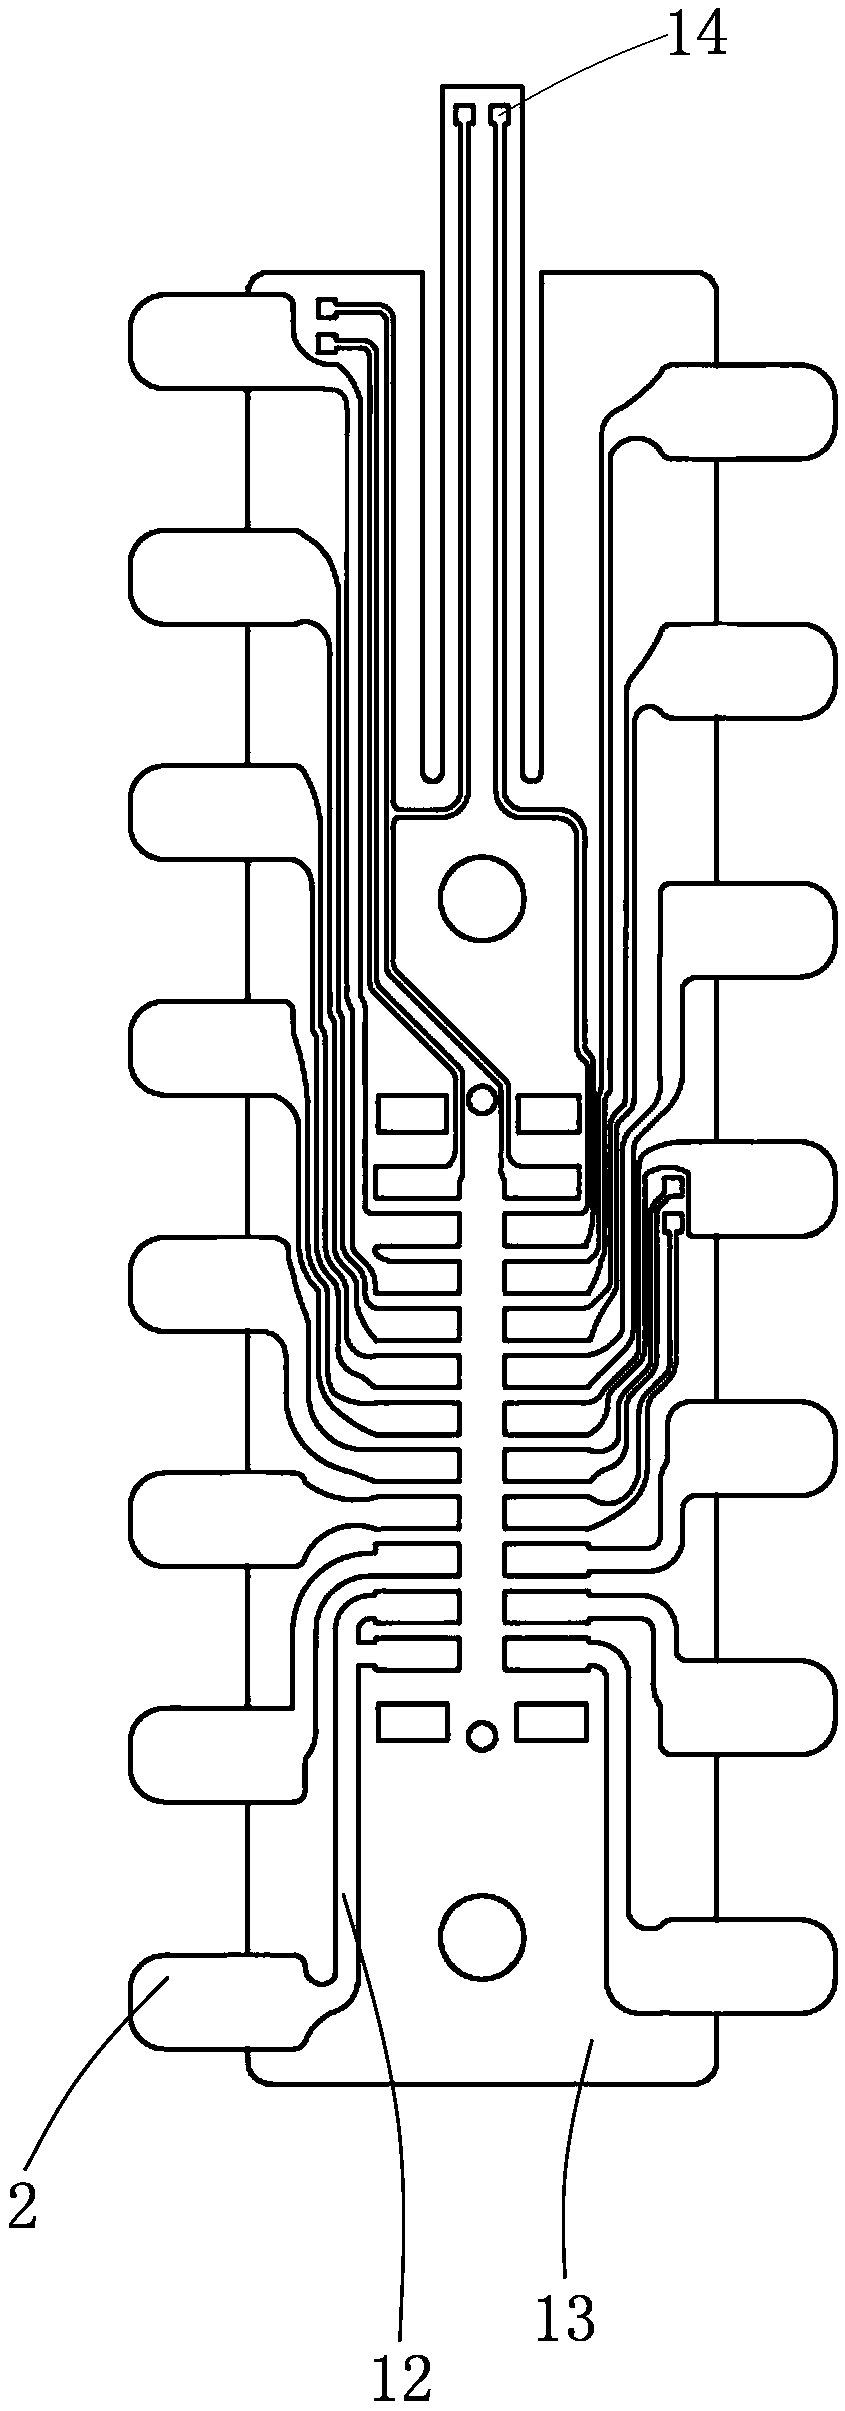 Flexible circuit board